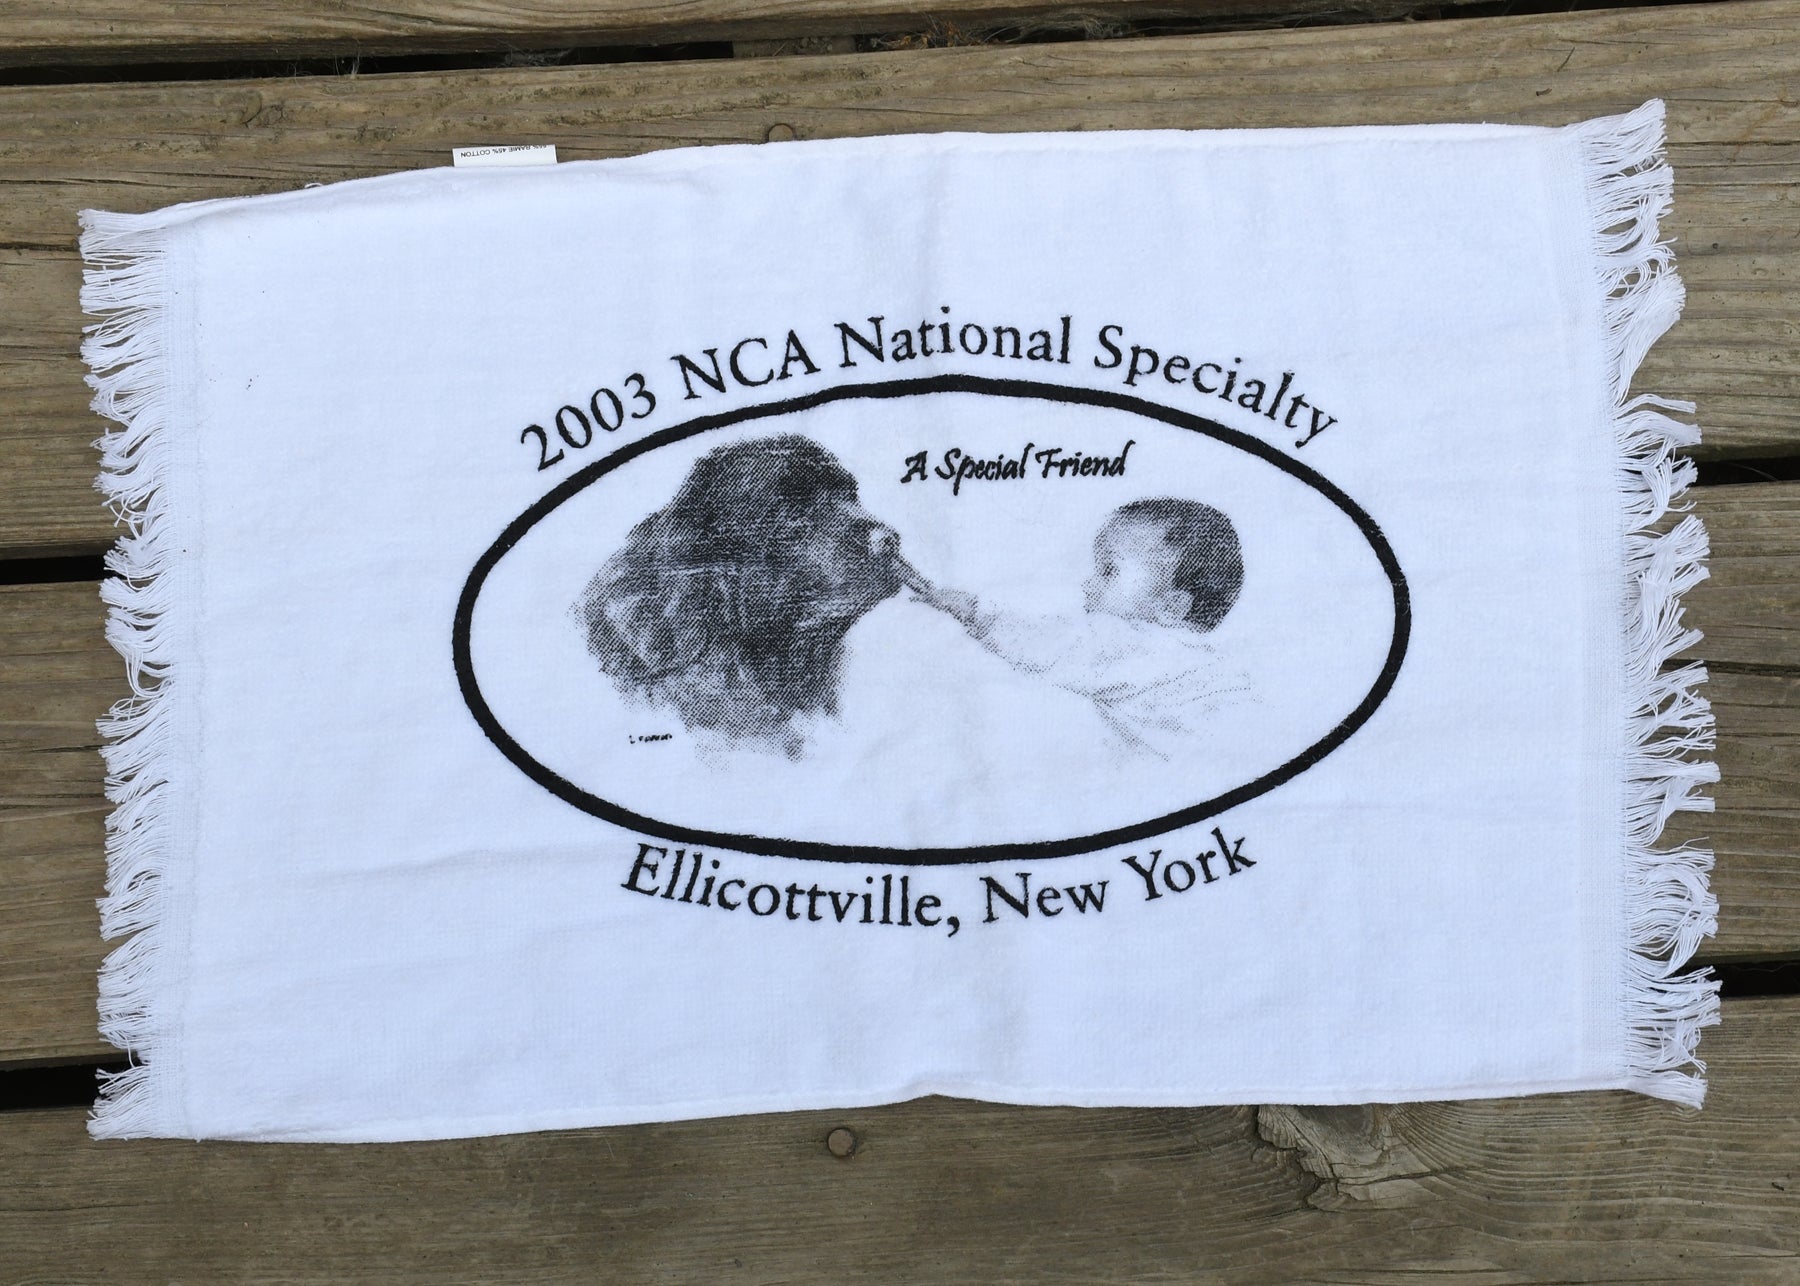 2003 NCA National Specialty Towel